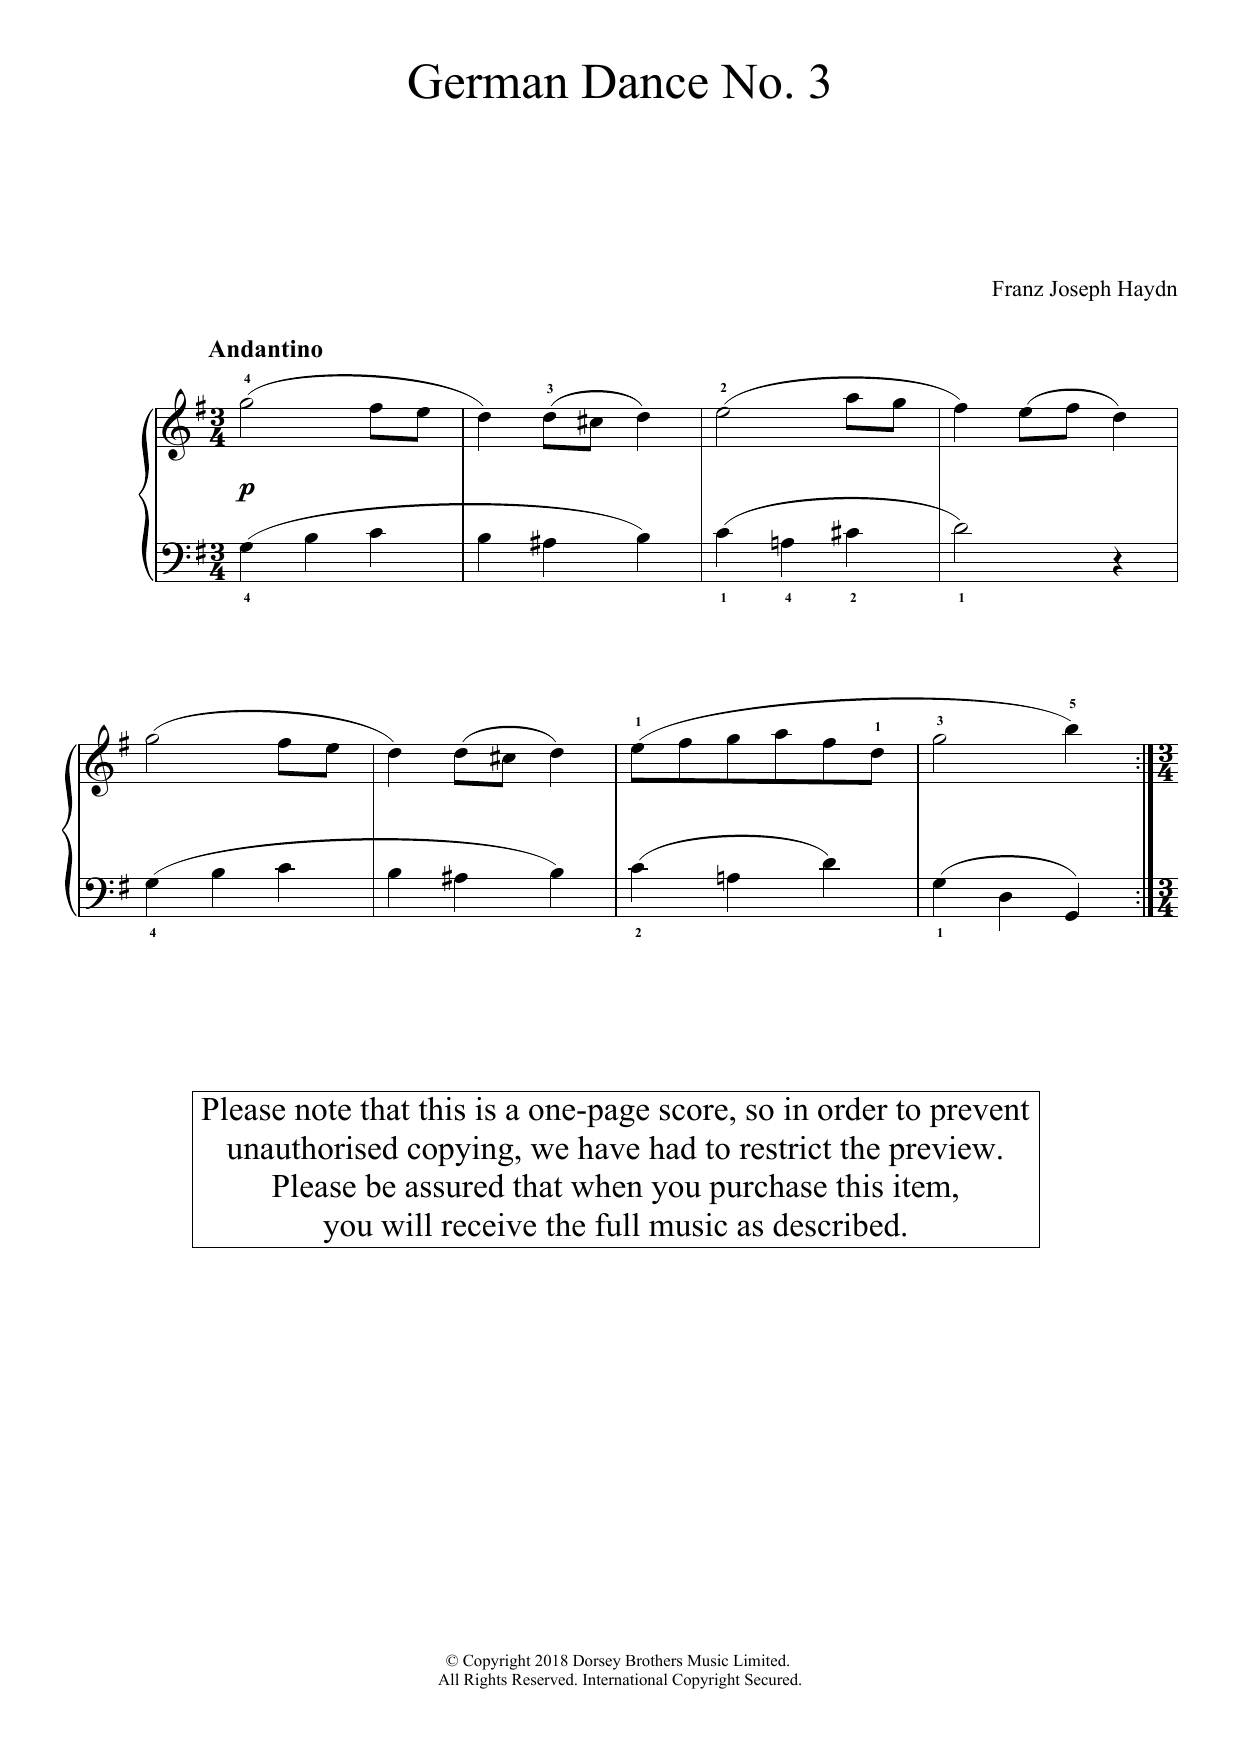 Download Franz Joseph Haydn German Dance No. 3 Sheet Music